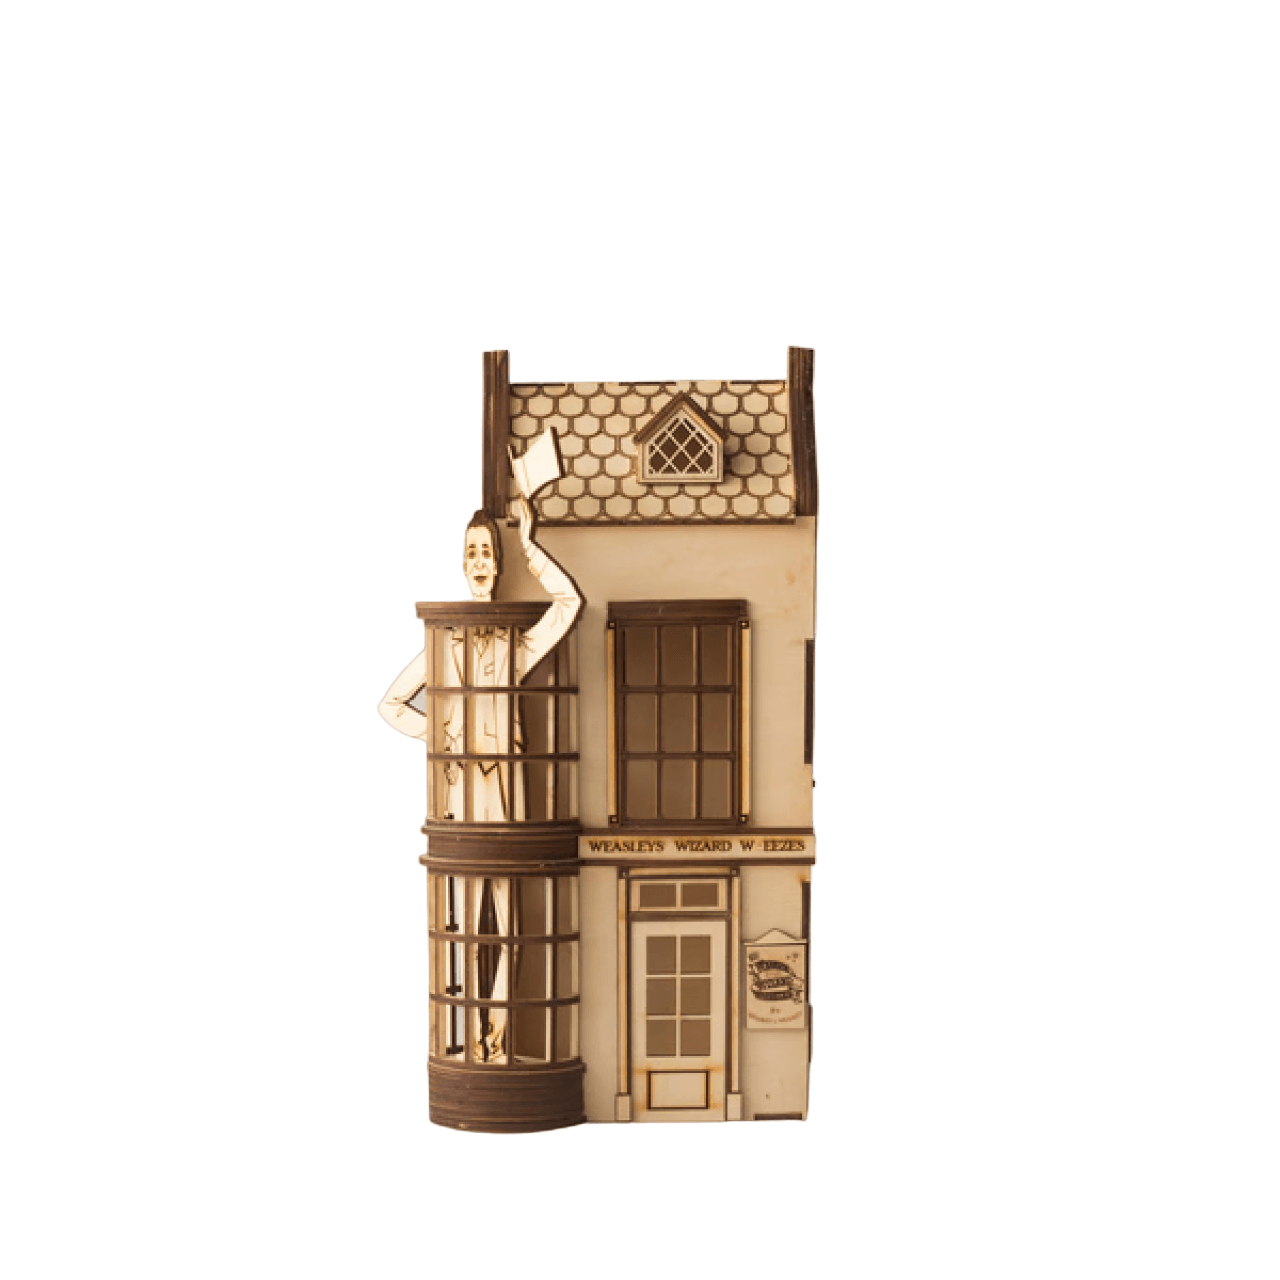 DIY Dollhouse Kit Wooden Miniature Diagon Alley Shops Weasleys' Wizard Wheezes Miniature Magical World Miniatures